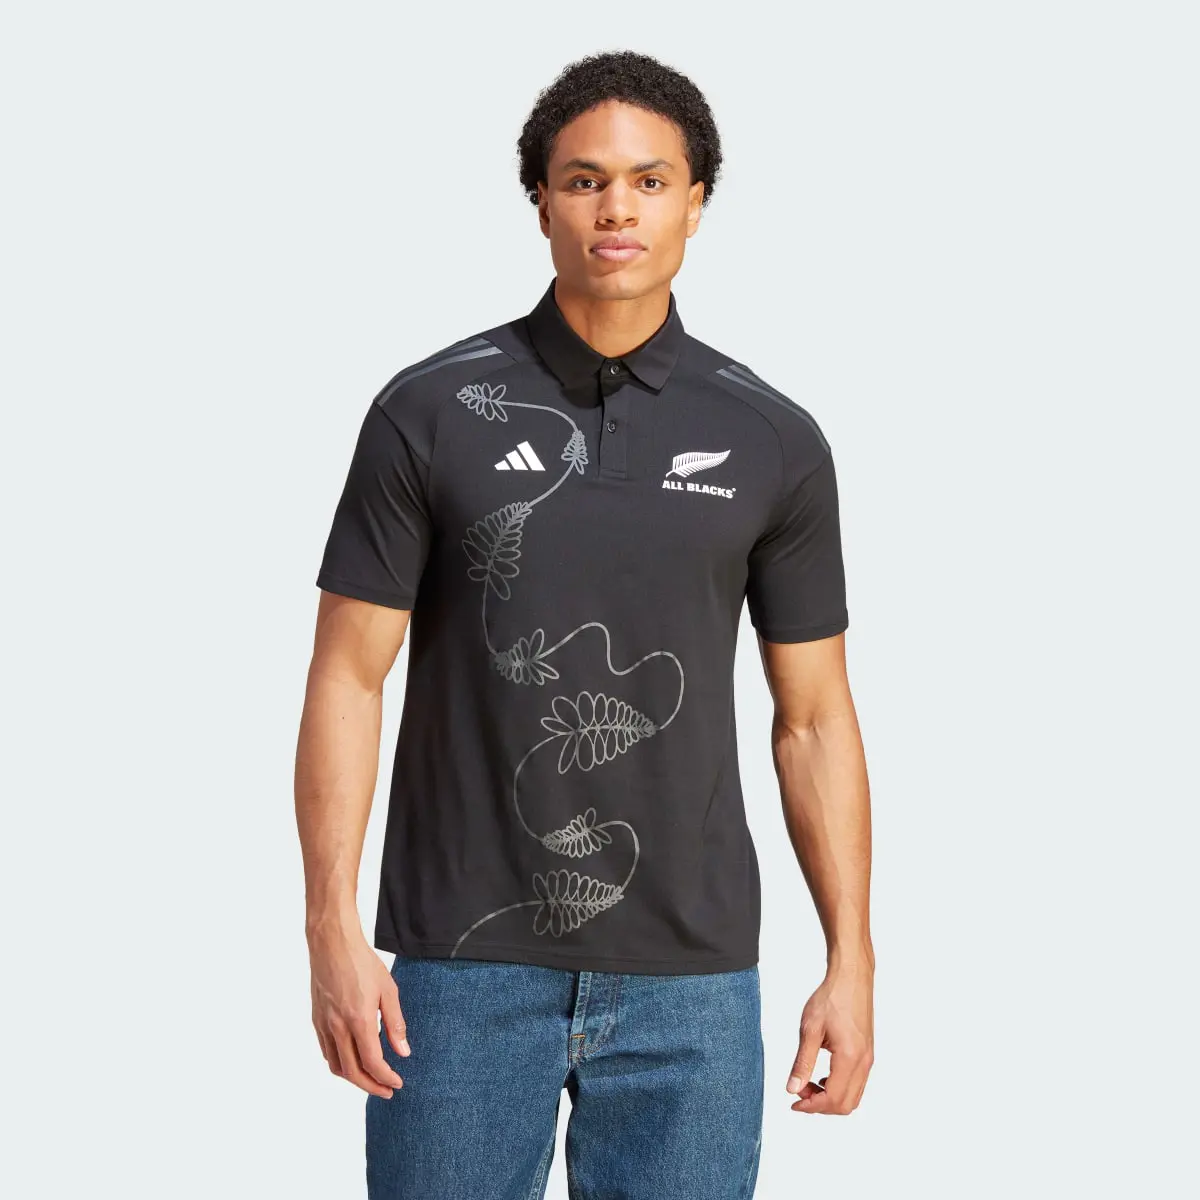 Adidas All Blacks Rugby Polo Shirt. 2